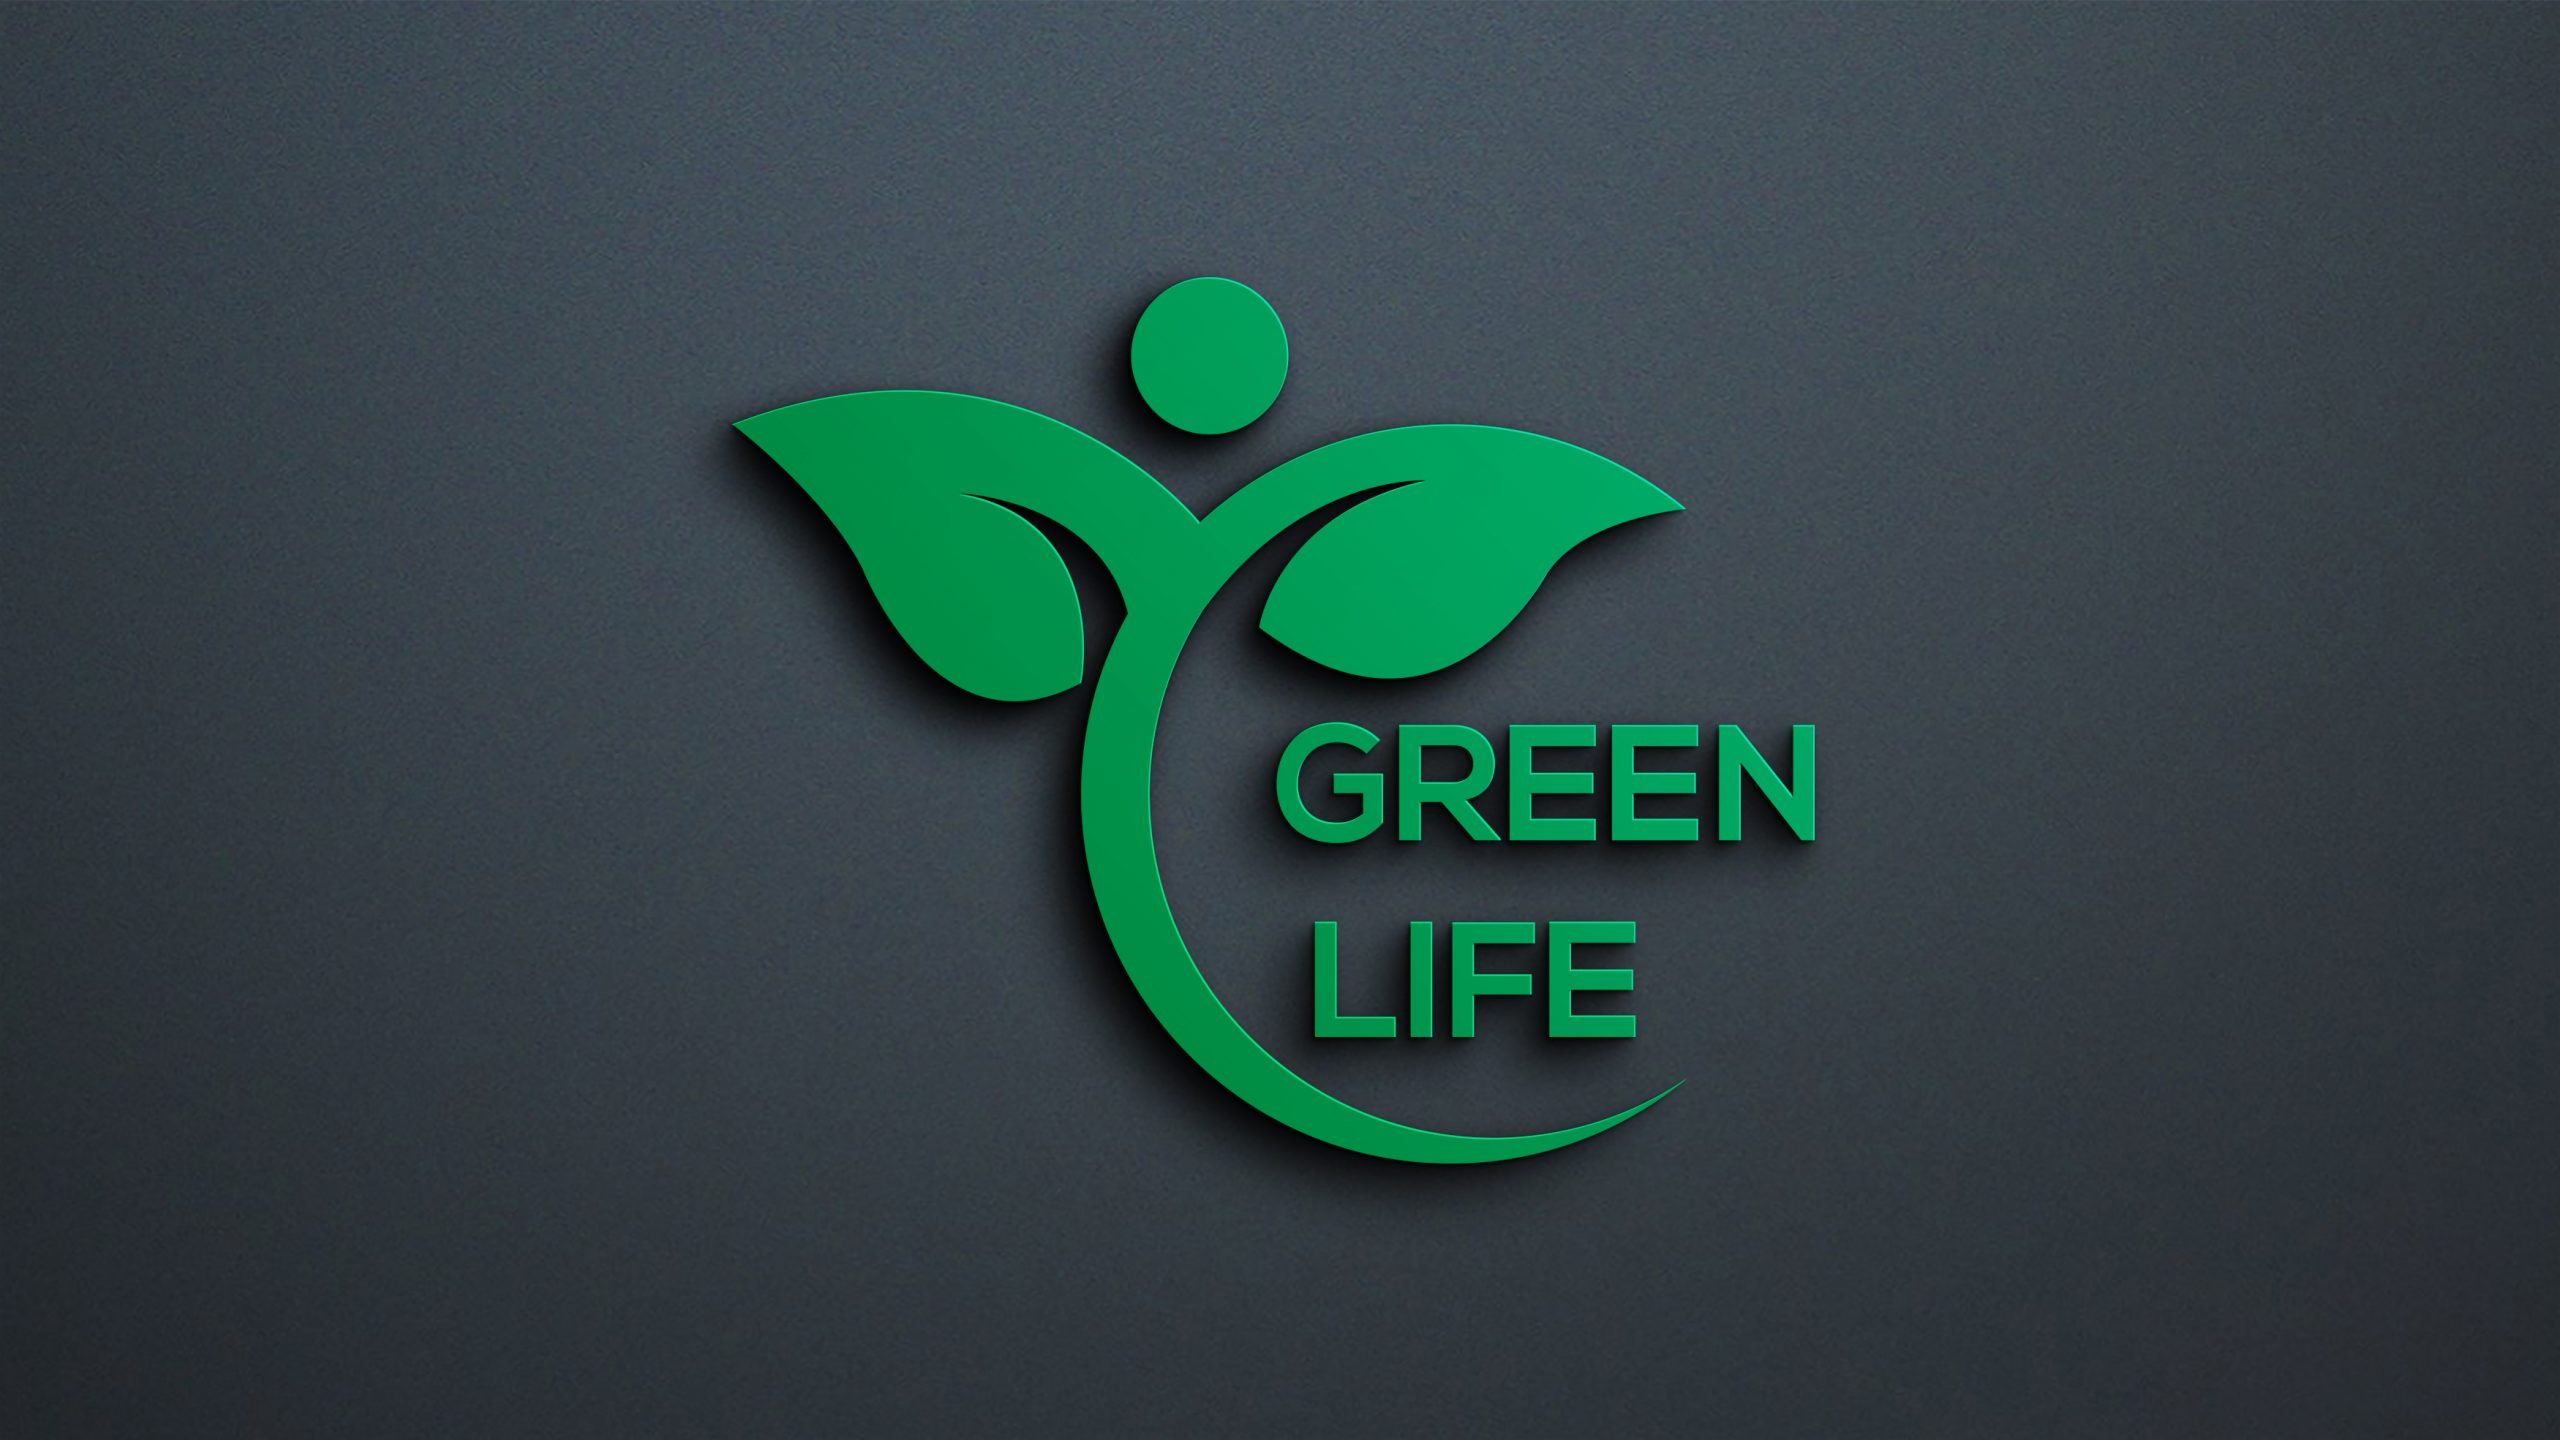 Green is life. Green лого. Green лайф logo. Greenlife лого. Логотип ресторана Greenlife.